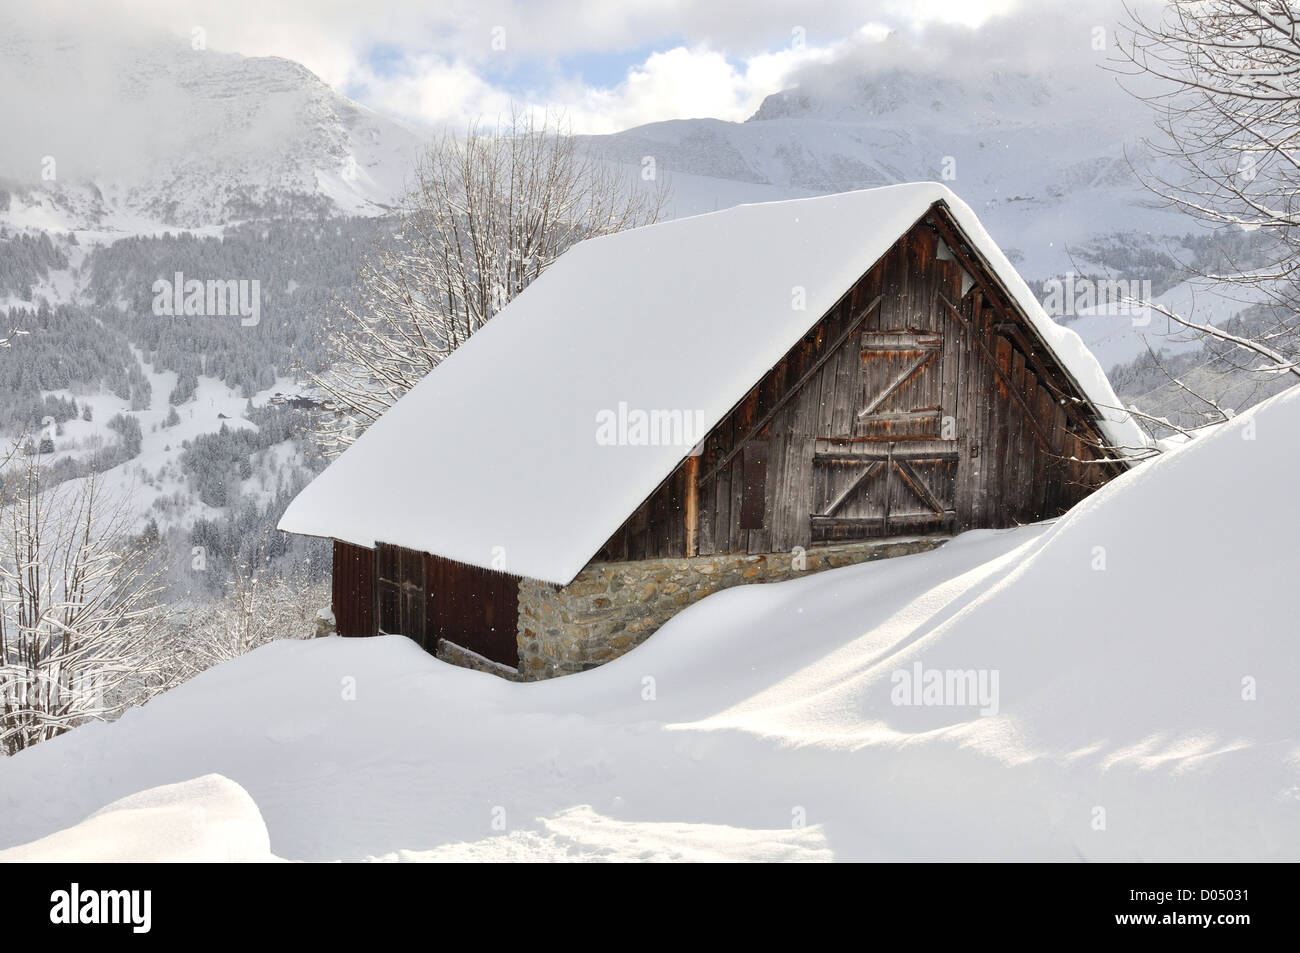 Chalet montagna coperta di neve dopo una nevicata Foto Stock